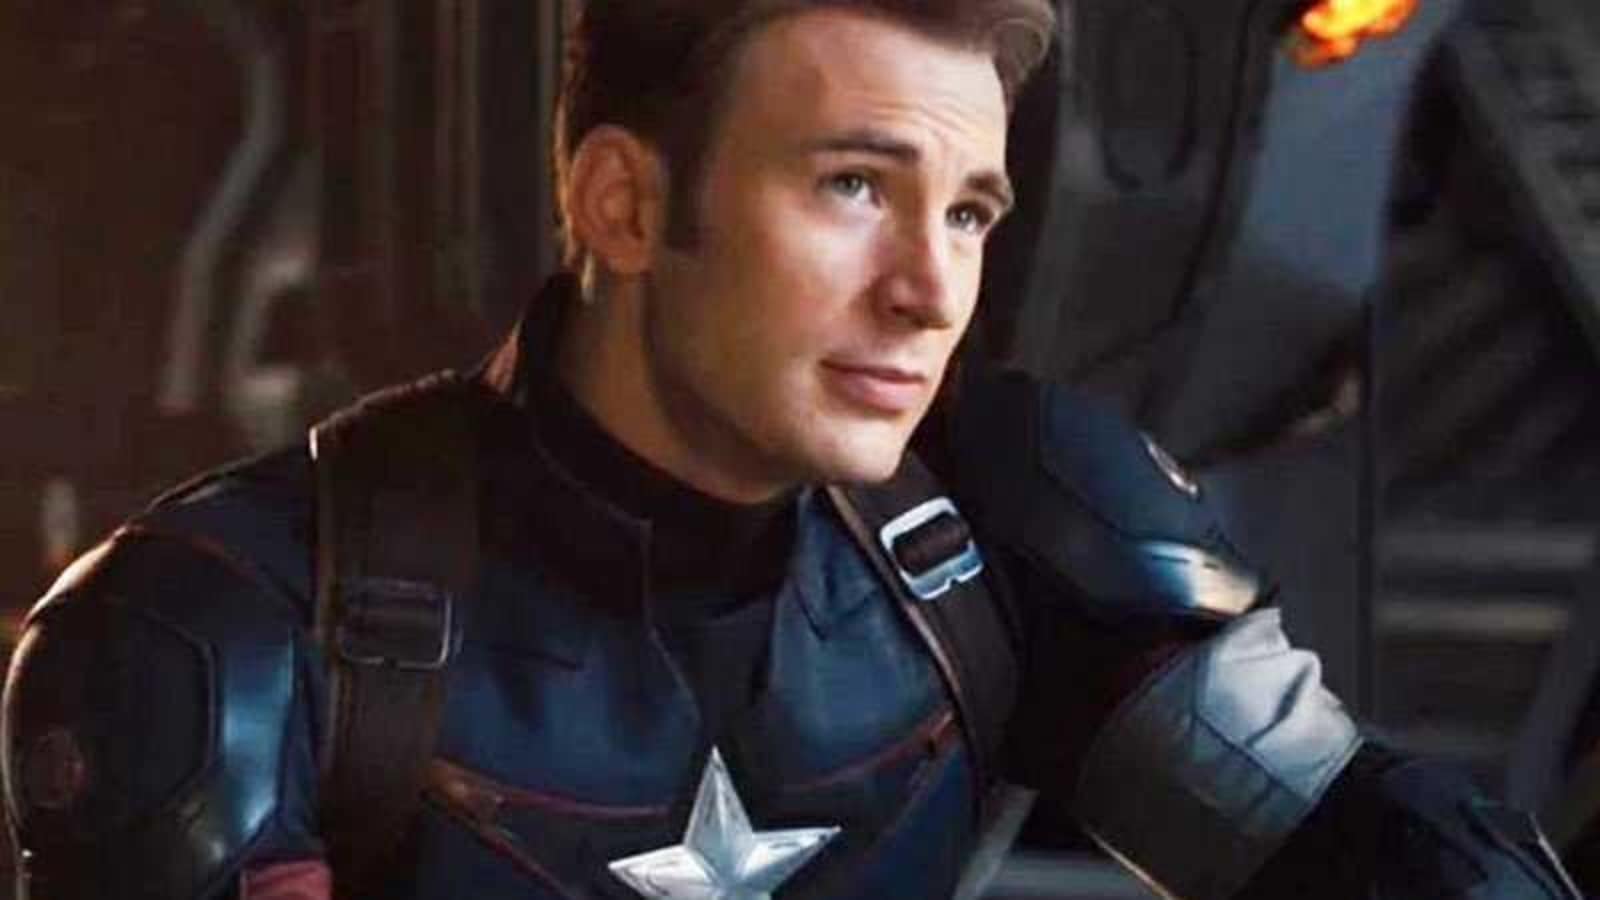 avengers captain america actor